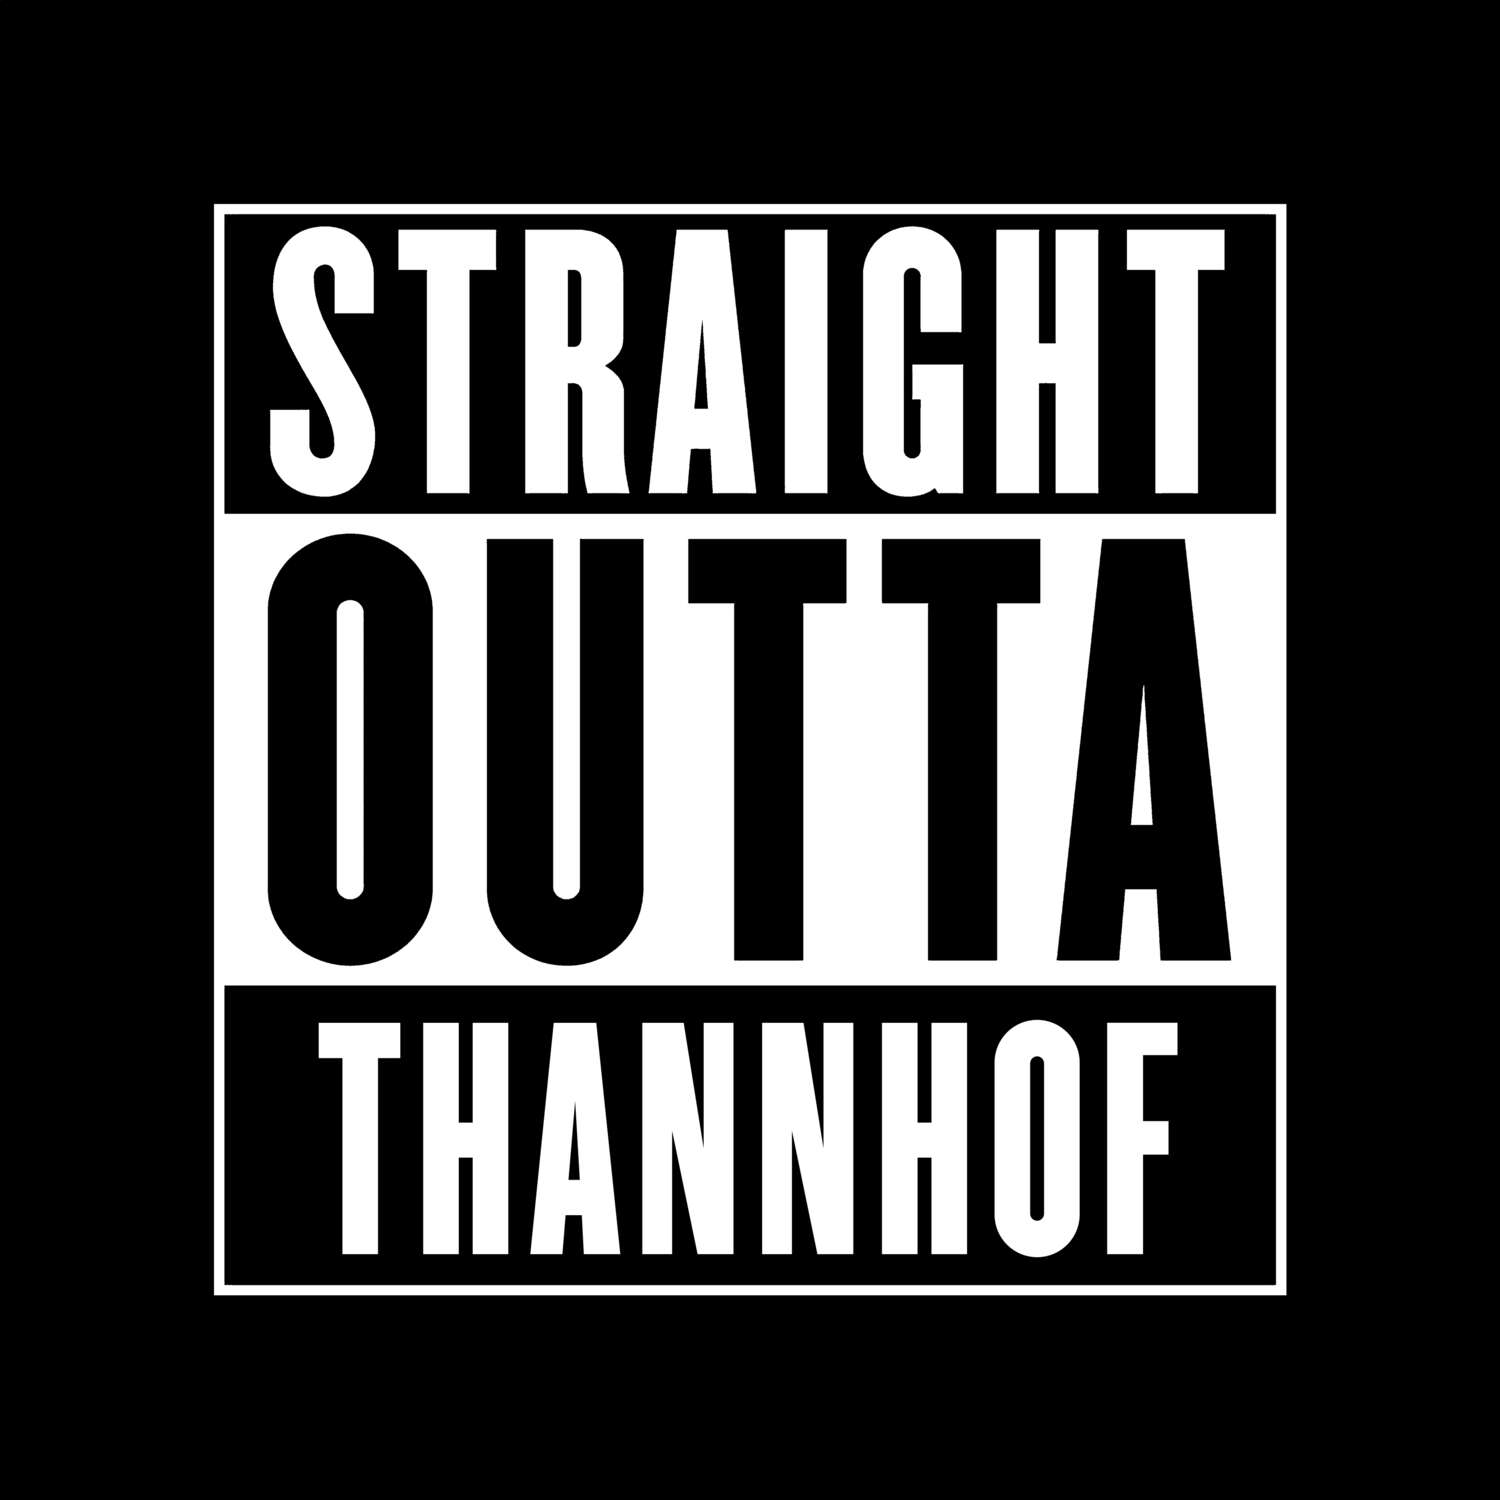 Thannhof T-Shirt »Straight Outta«